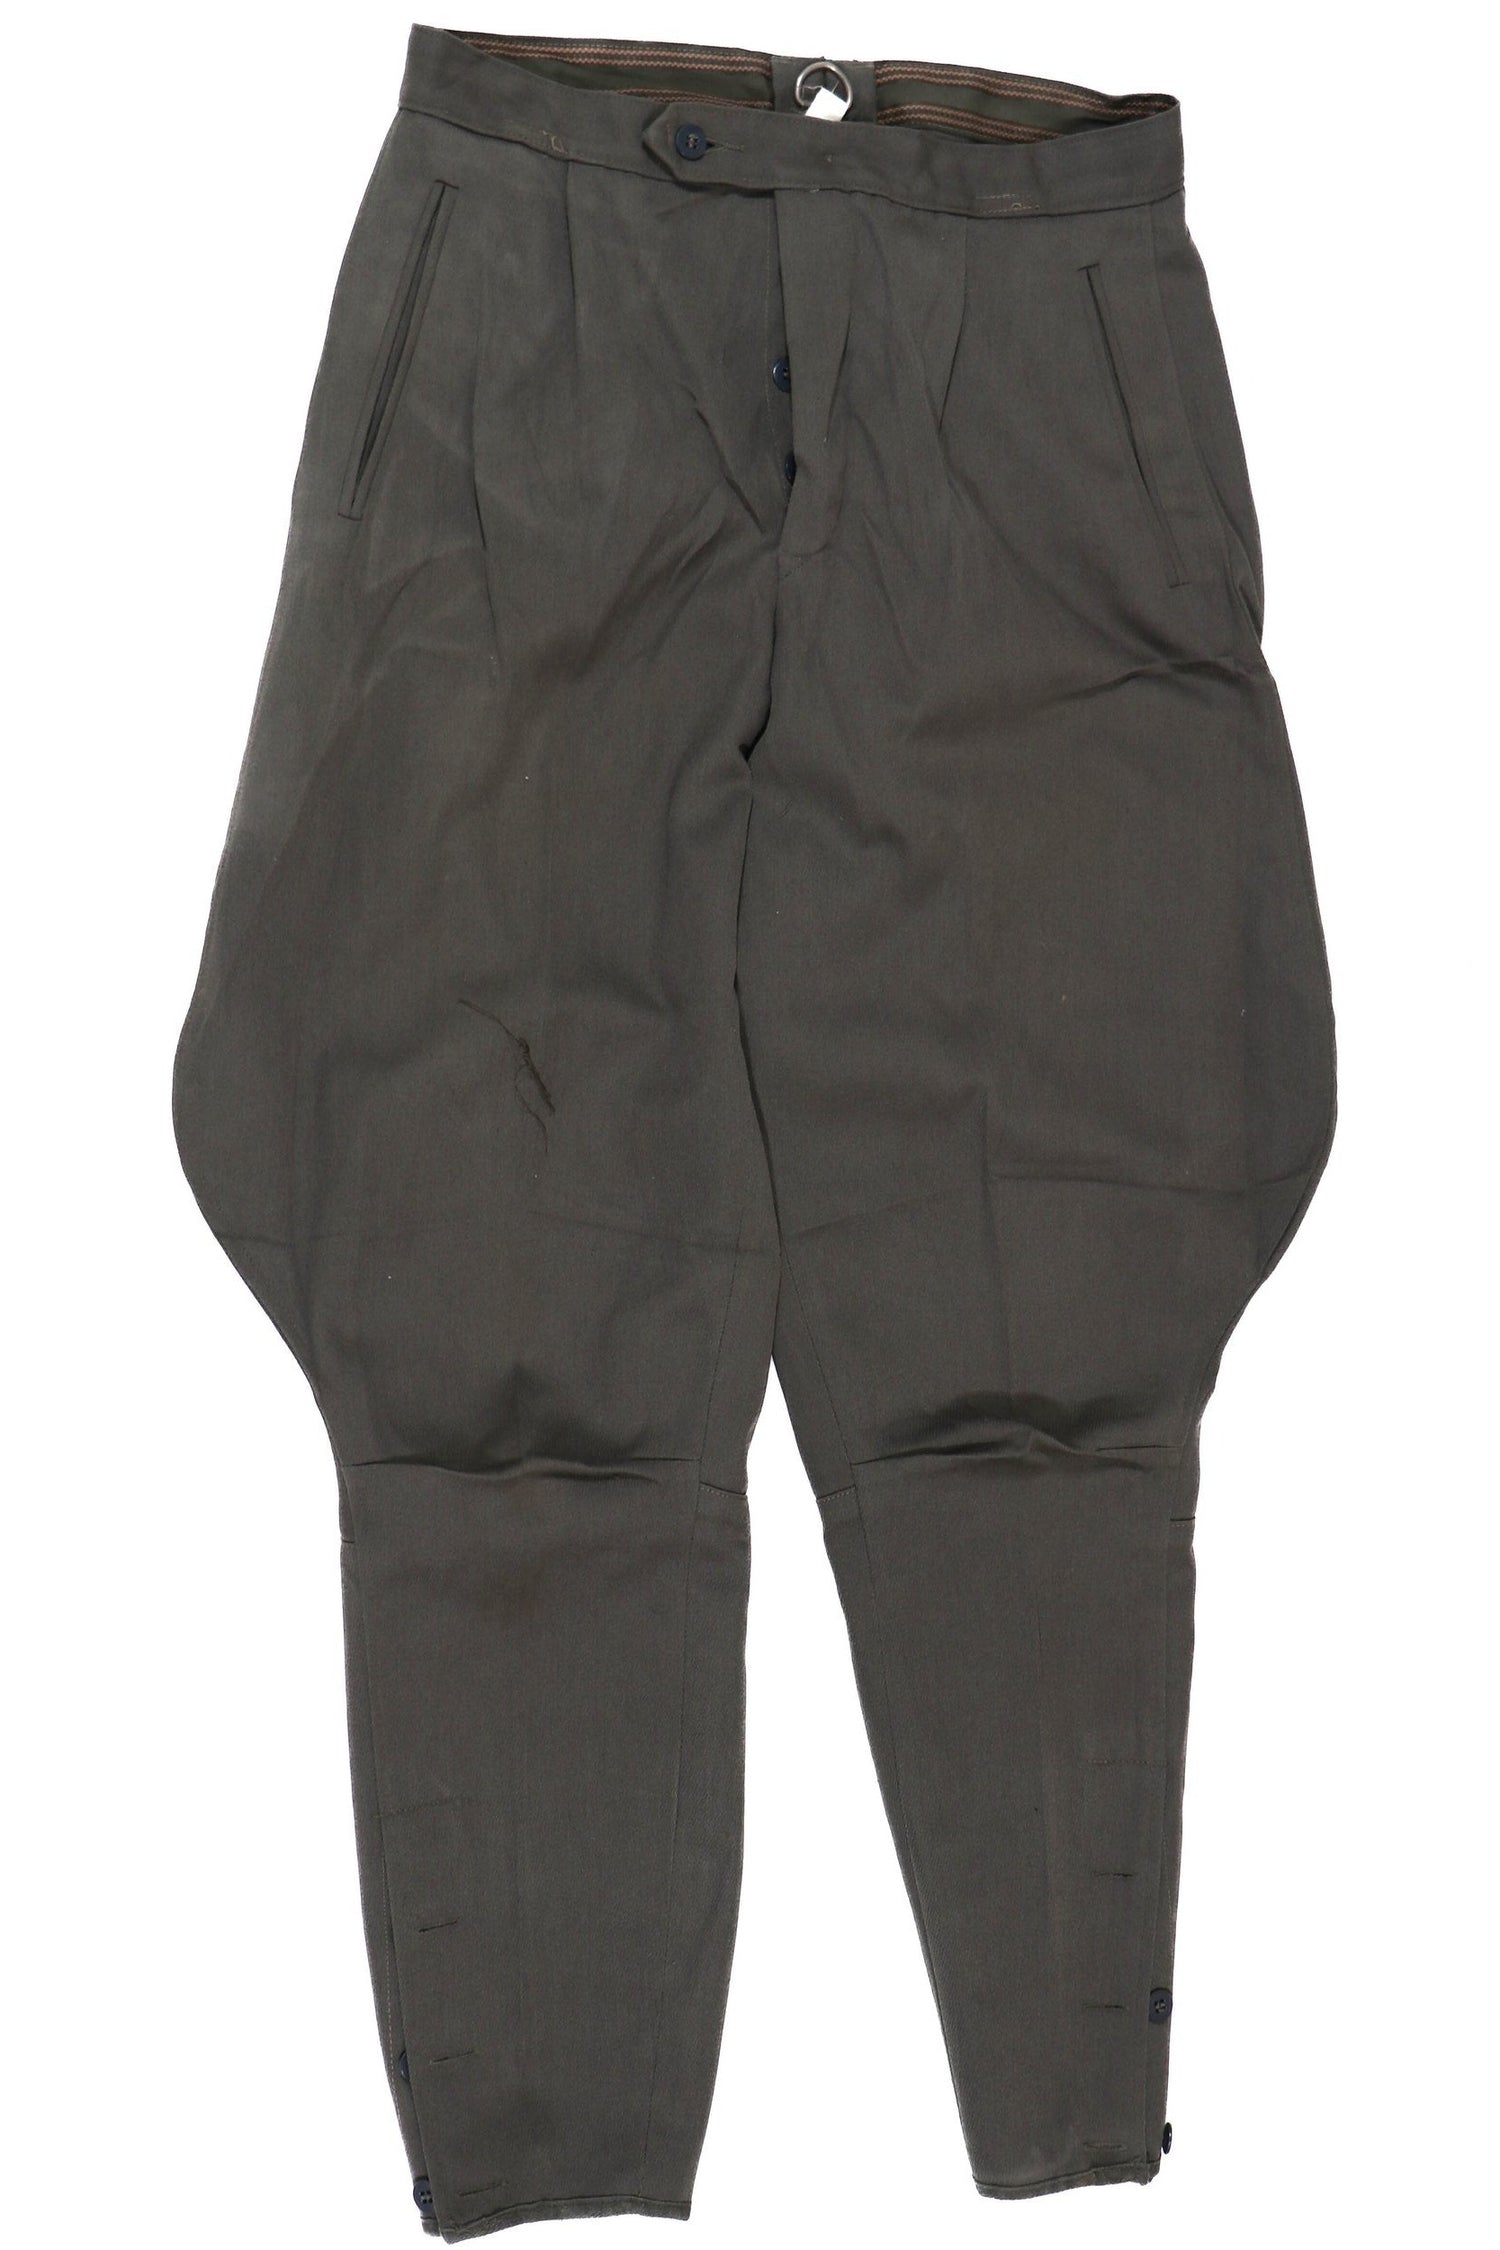 East German Grey Officer Trousers